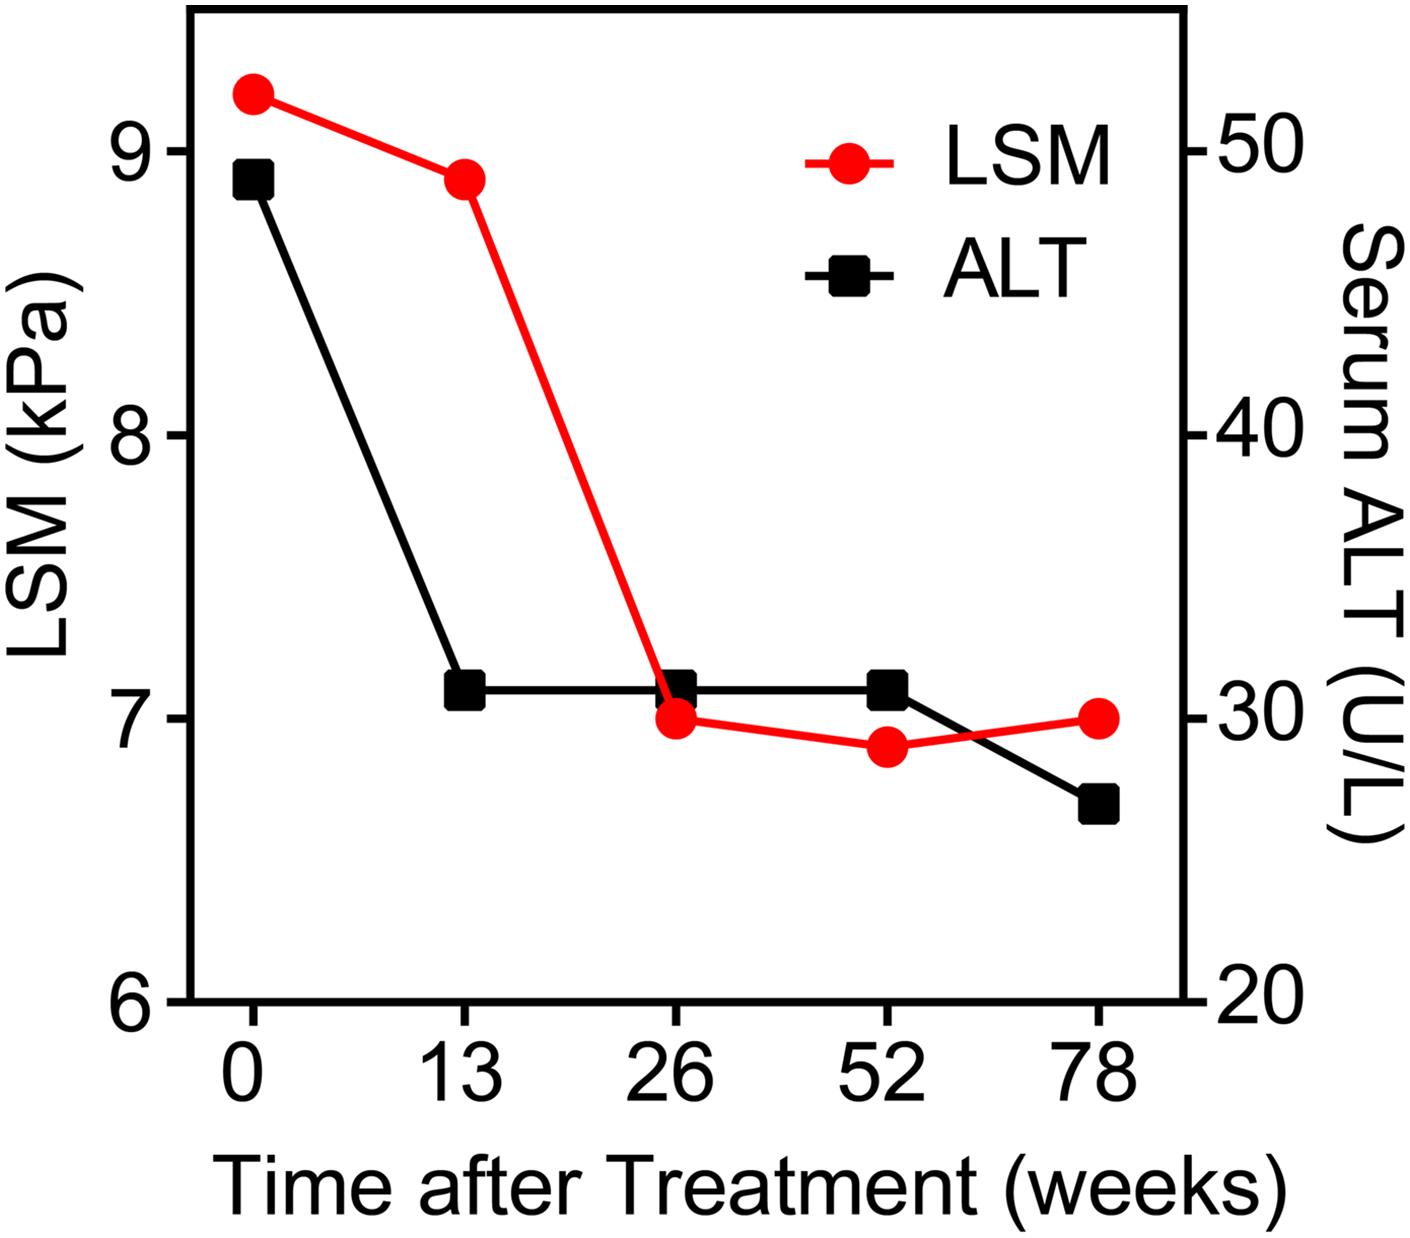 In longitudinal cohort LSM and alanine aminotransferase (median±interquartile range) level change during treatment with entecavir.